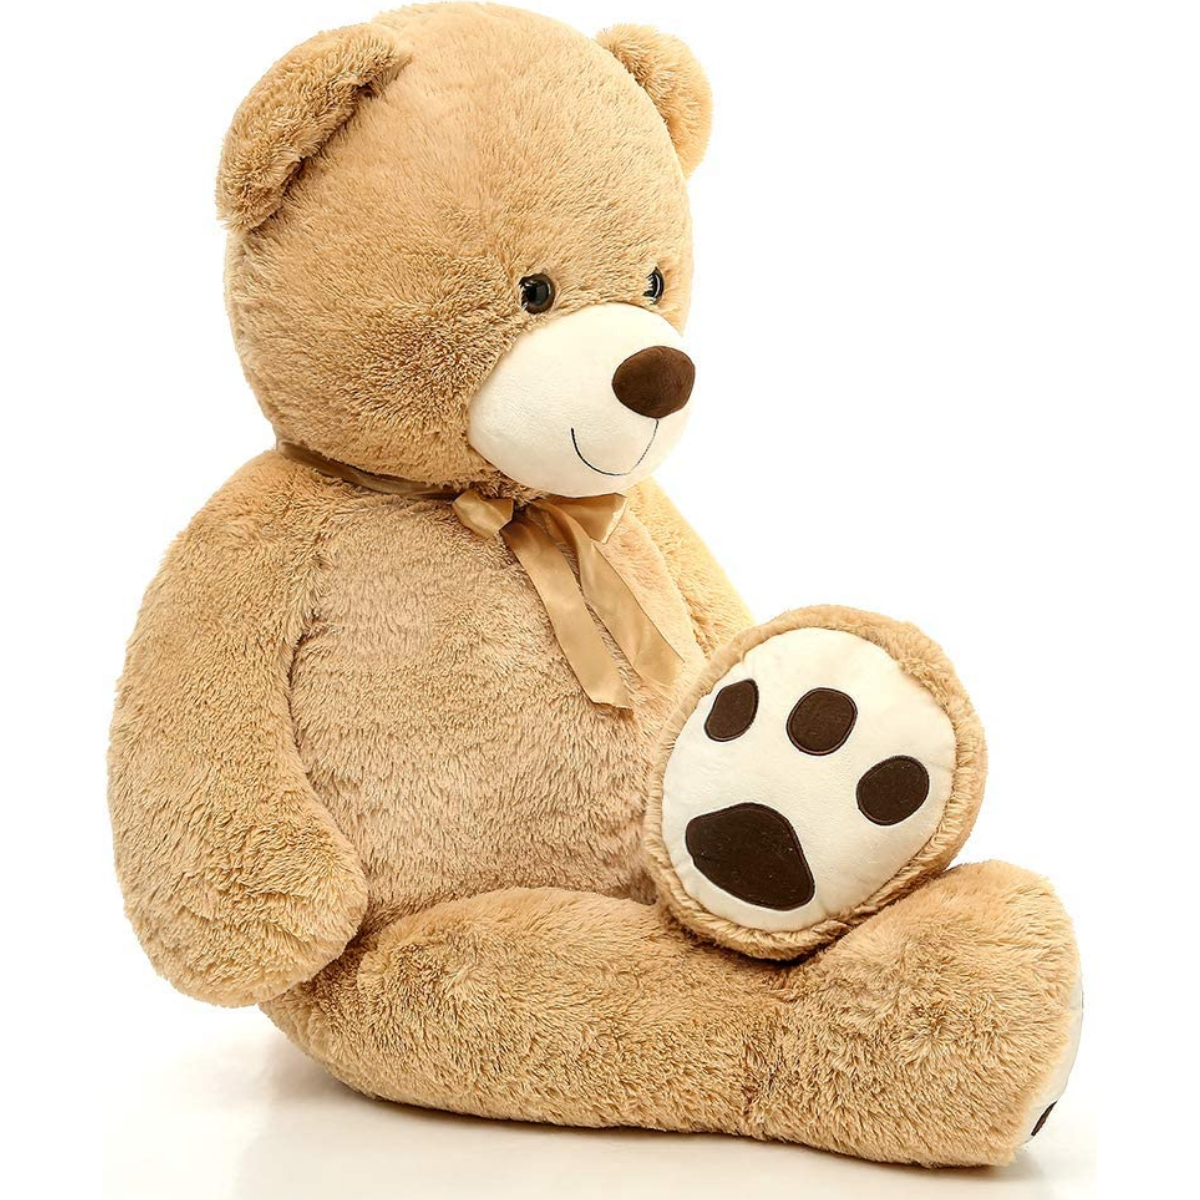 MorisMos Giant Teddy Bear 35.4'' Soft Stuffed Animal Big Bear Plush Toy